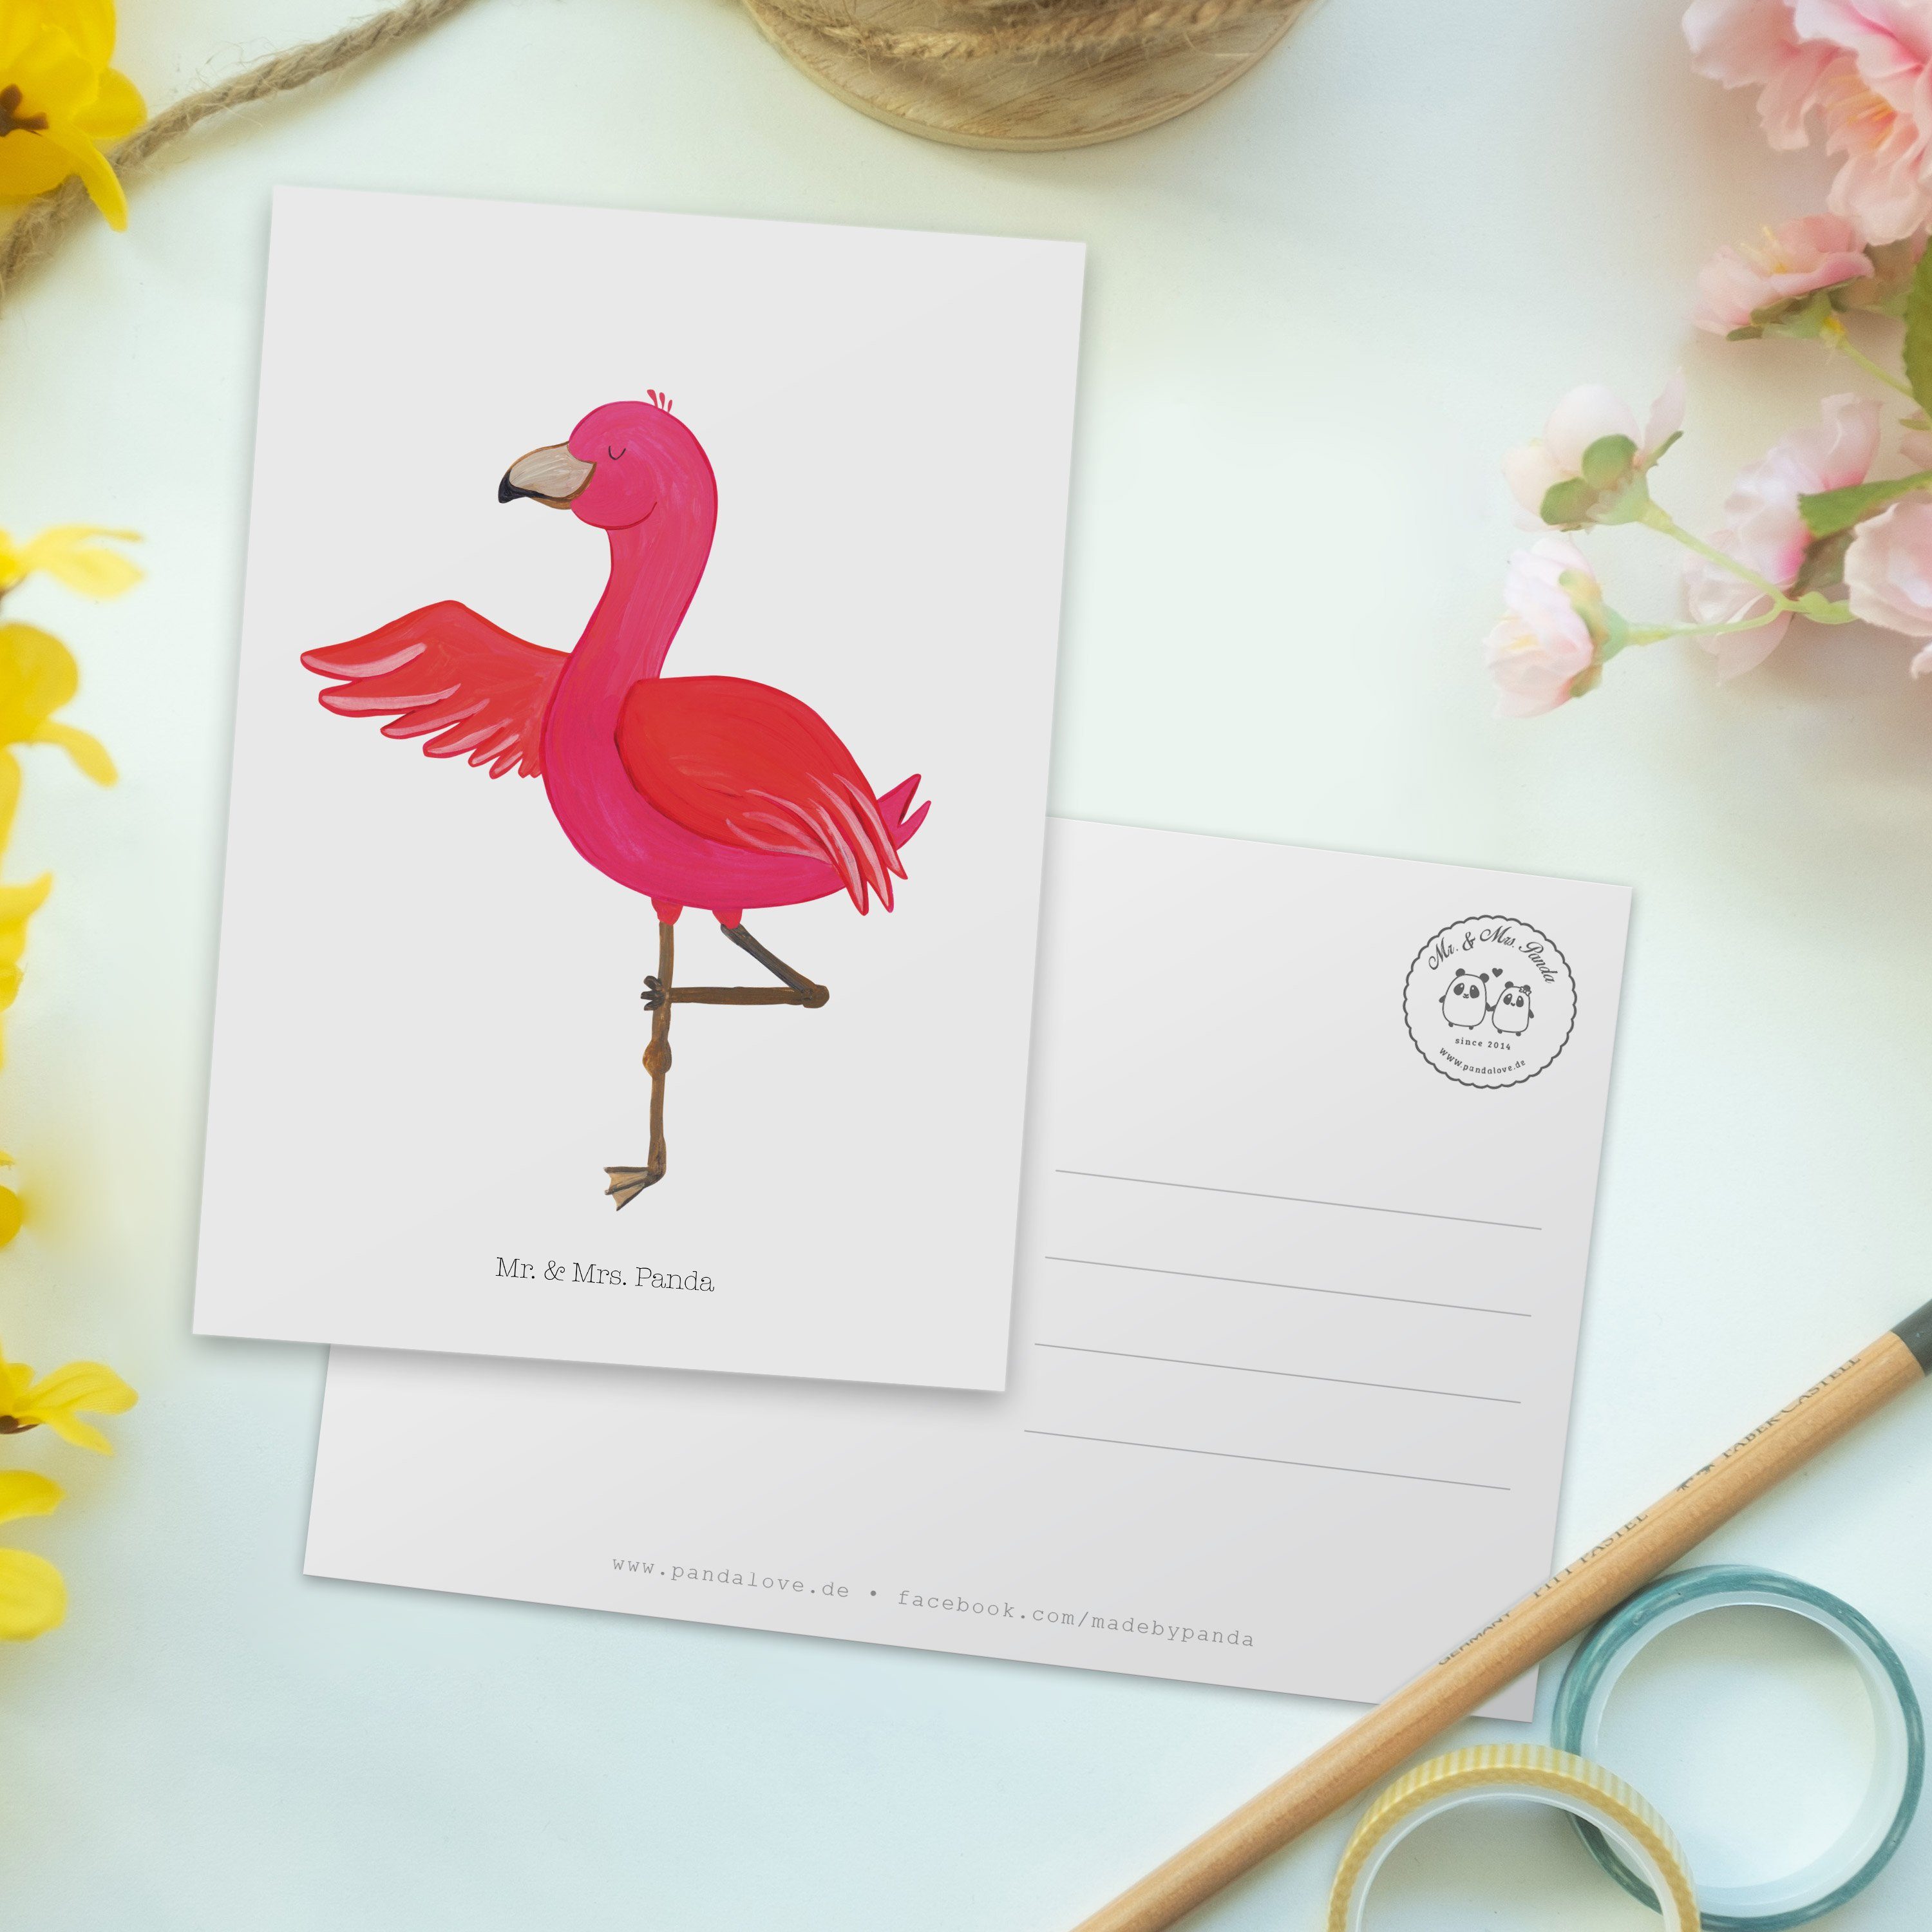 & Mrs. - Geschenk, Postkarte Panda Yoga-Übung, Flamingo Mr. - entspannt, Yoga Ansichtskarte Weiß